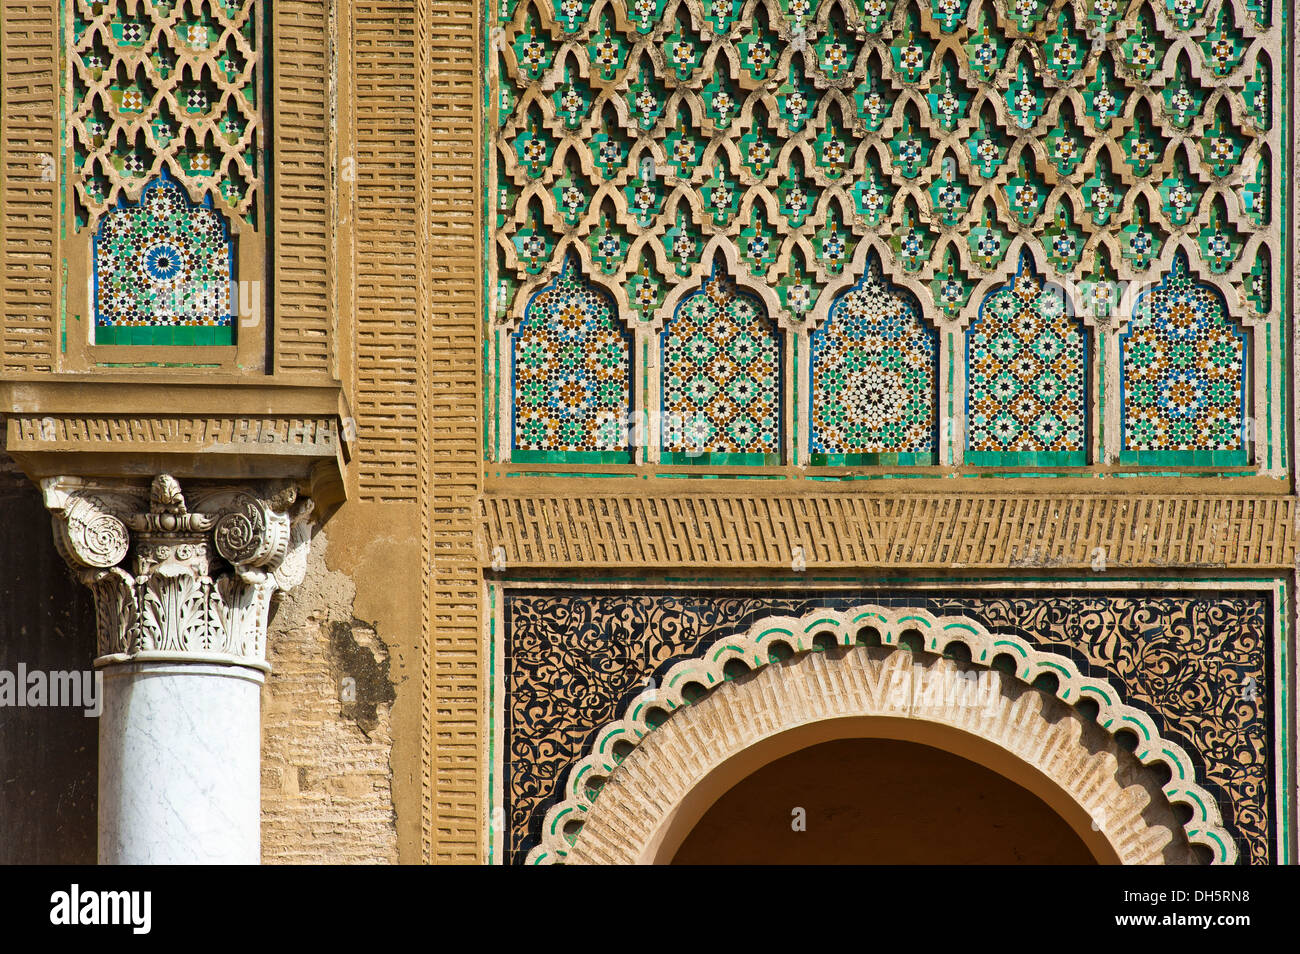 Columns with decorations and tile mosaics, zellige, zillij or zellij tilework on the Bab Mansour gate, medina, Meknes, Morocco Stock Photo